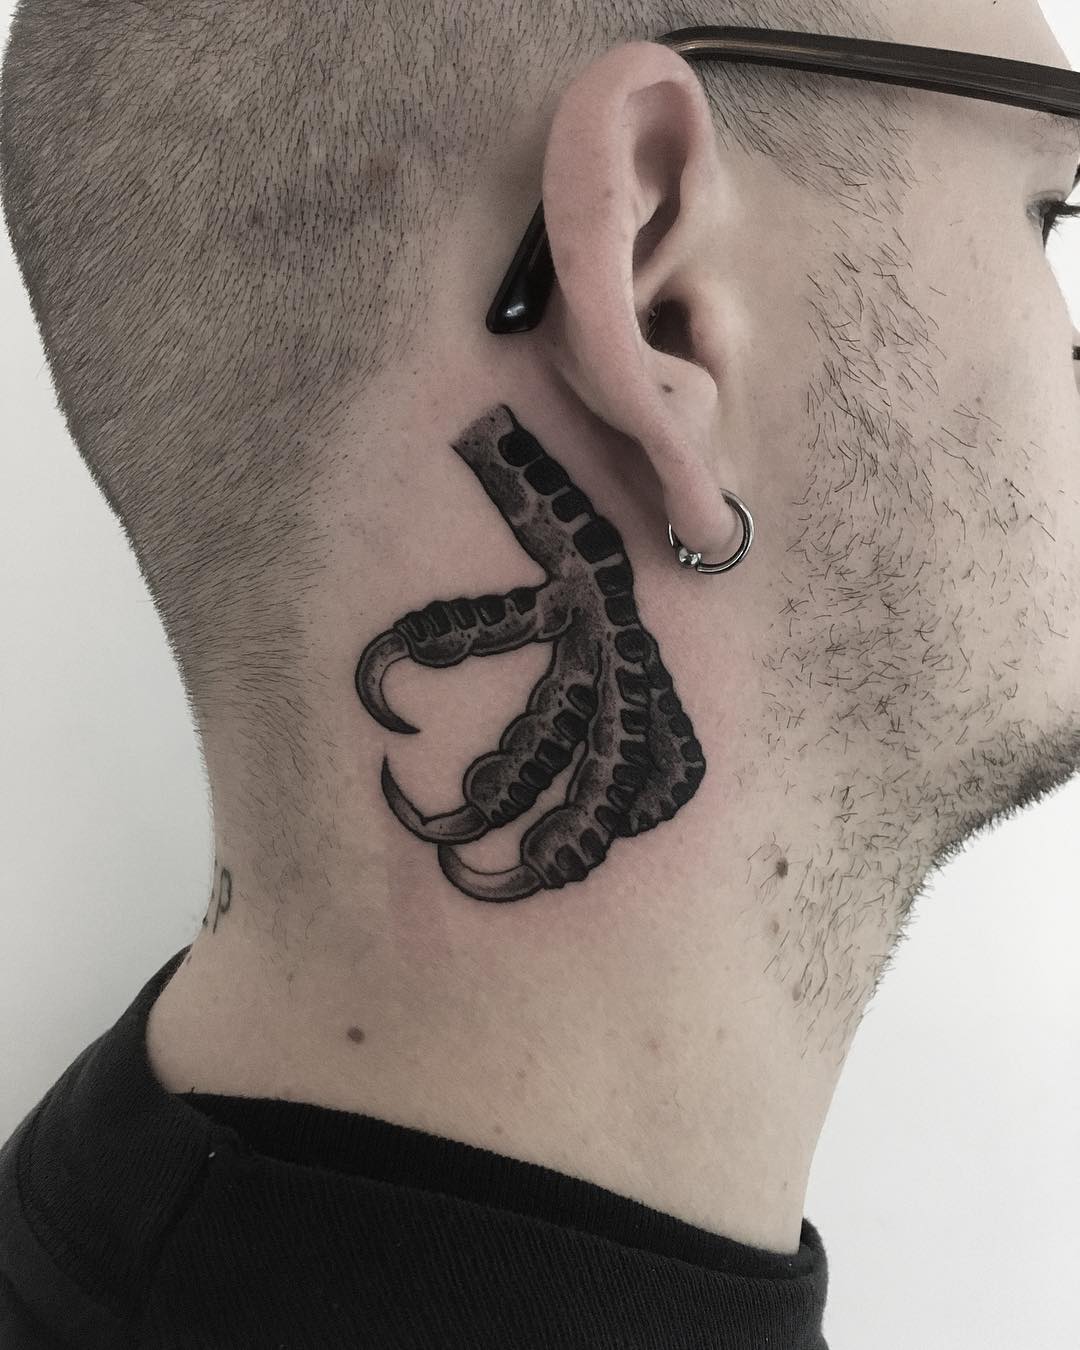 Claw behind the ear tattoo